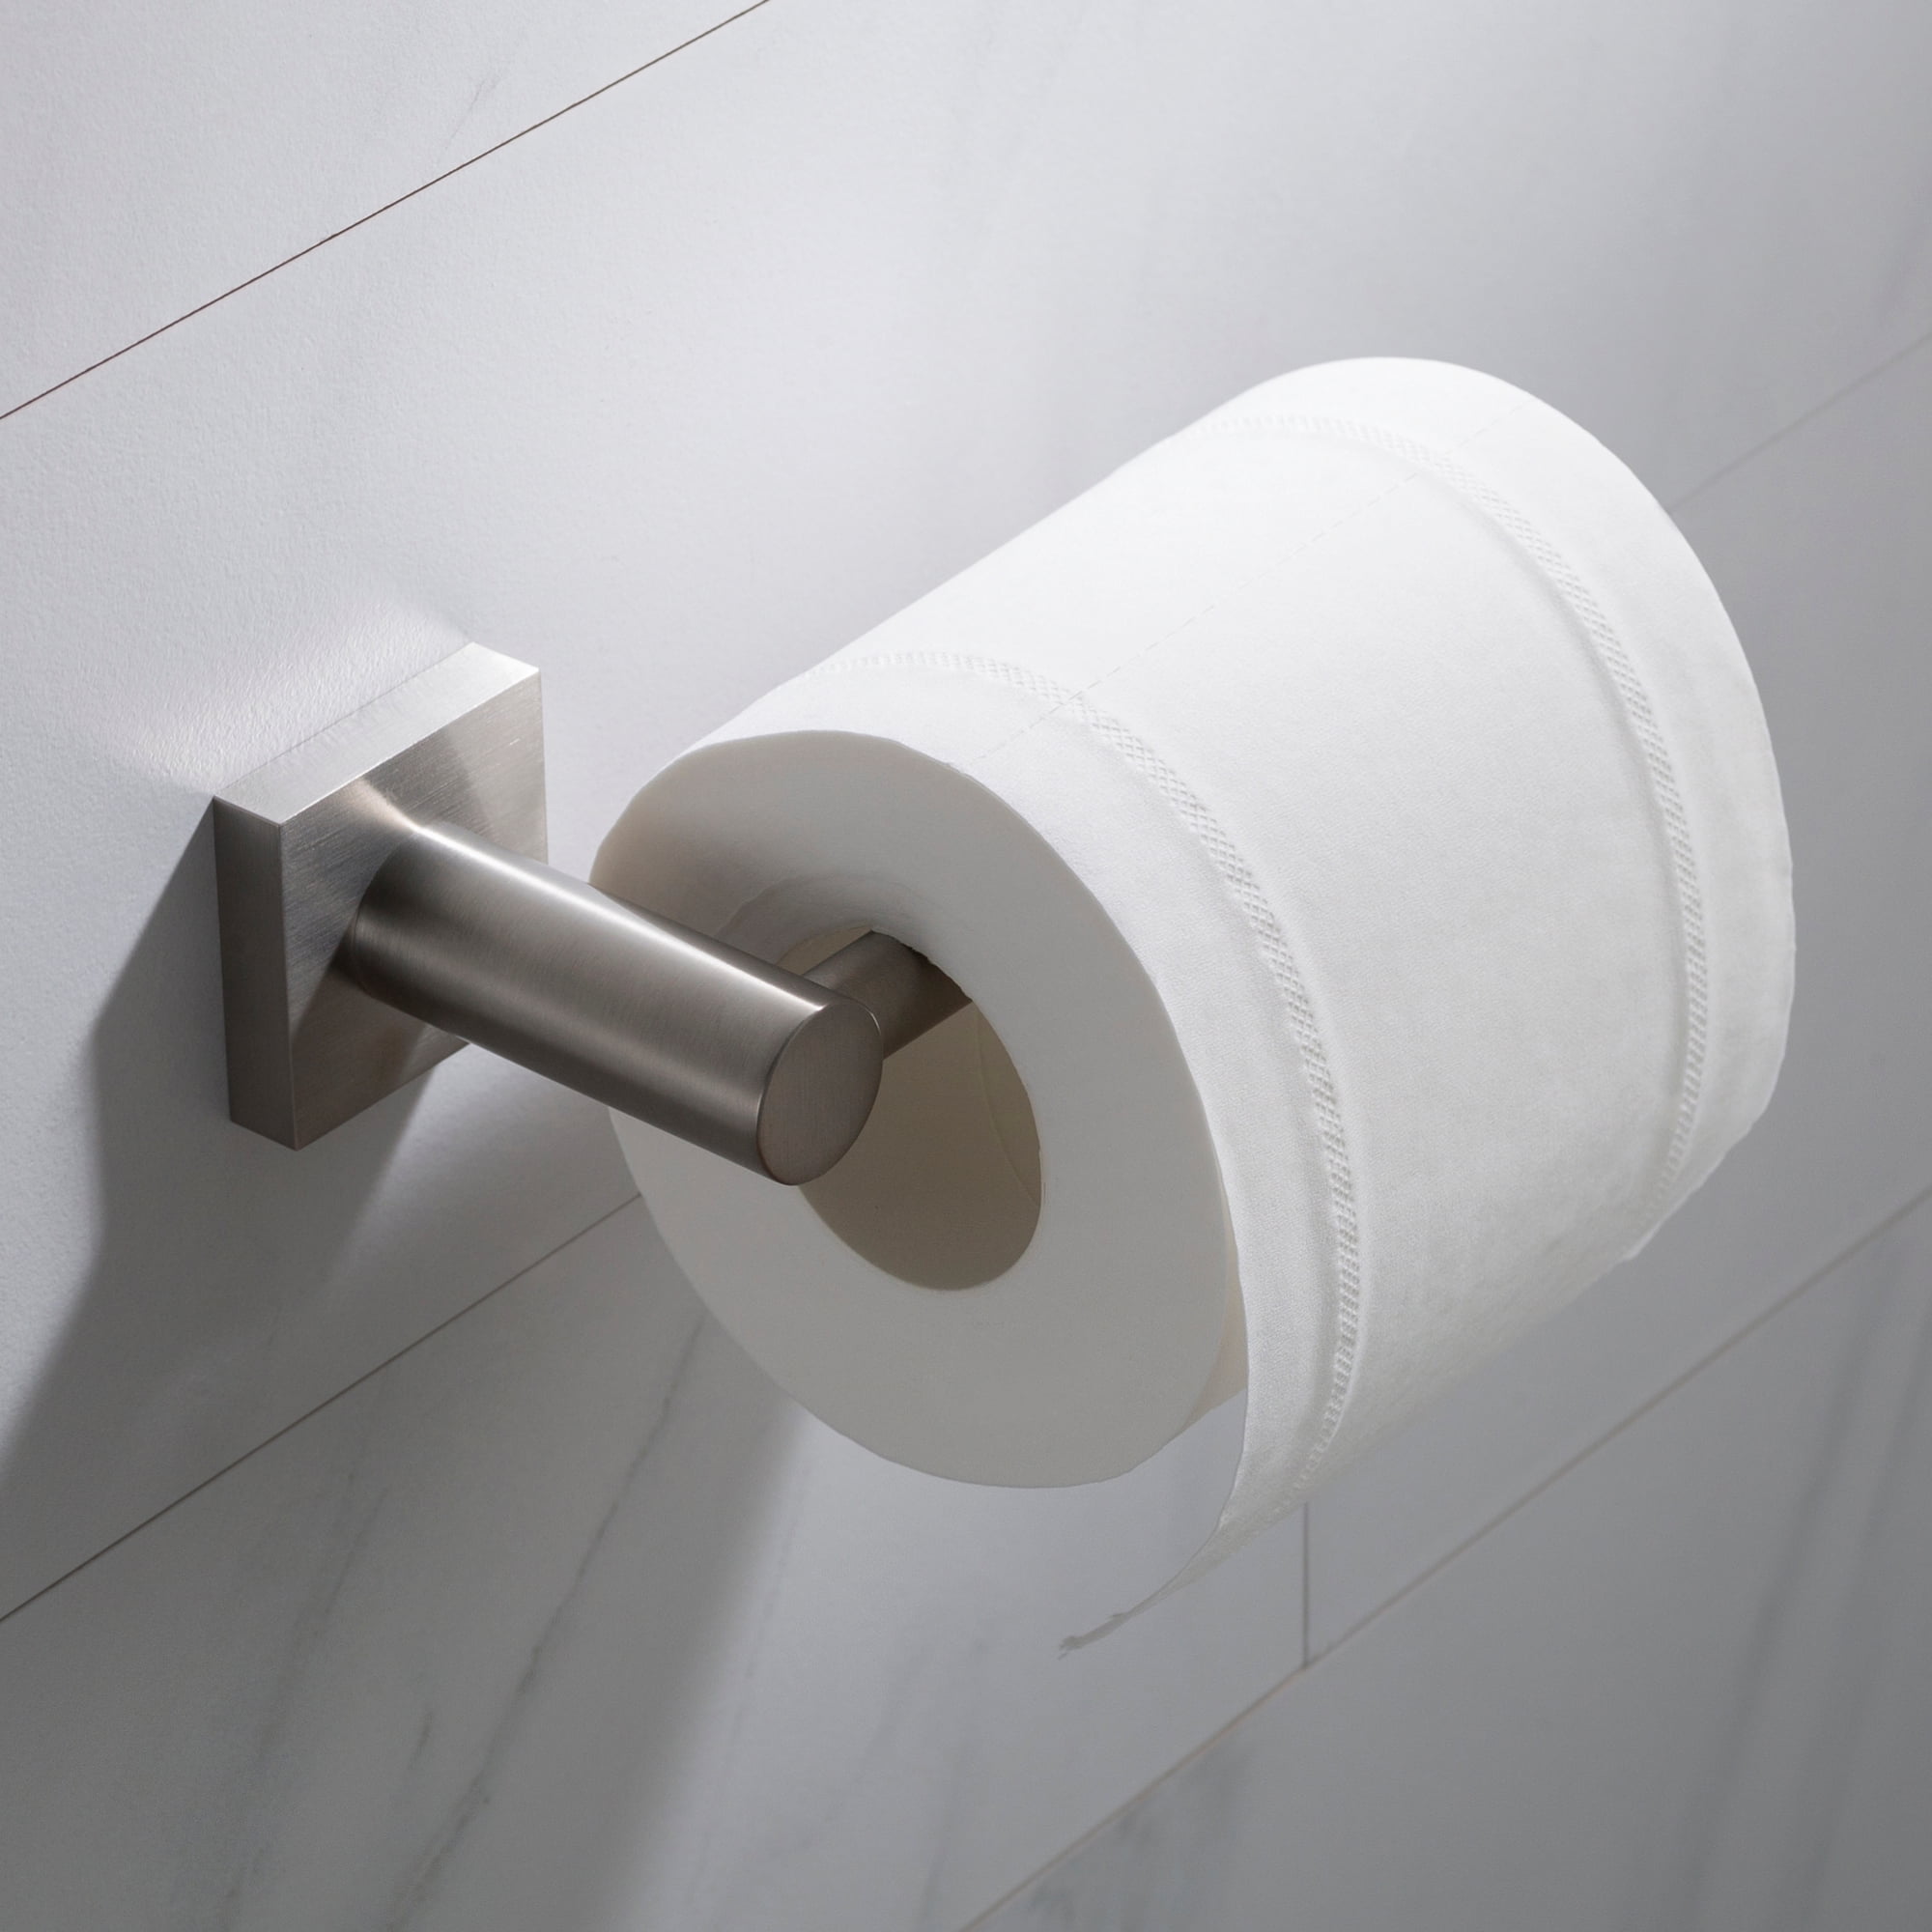 Gatco Recessed Toilet Paper Holder (Satin Nickel)